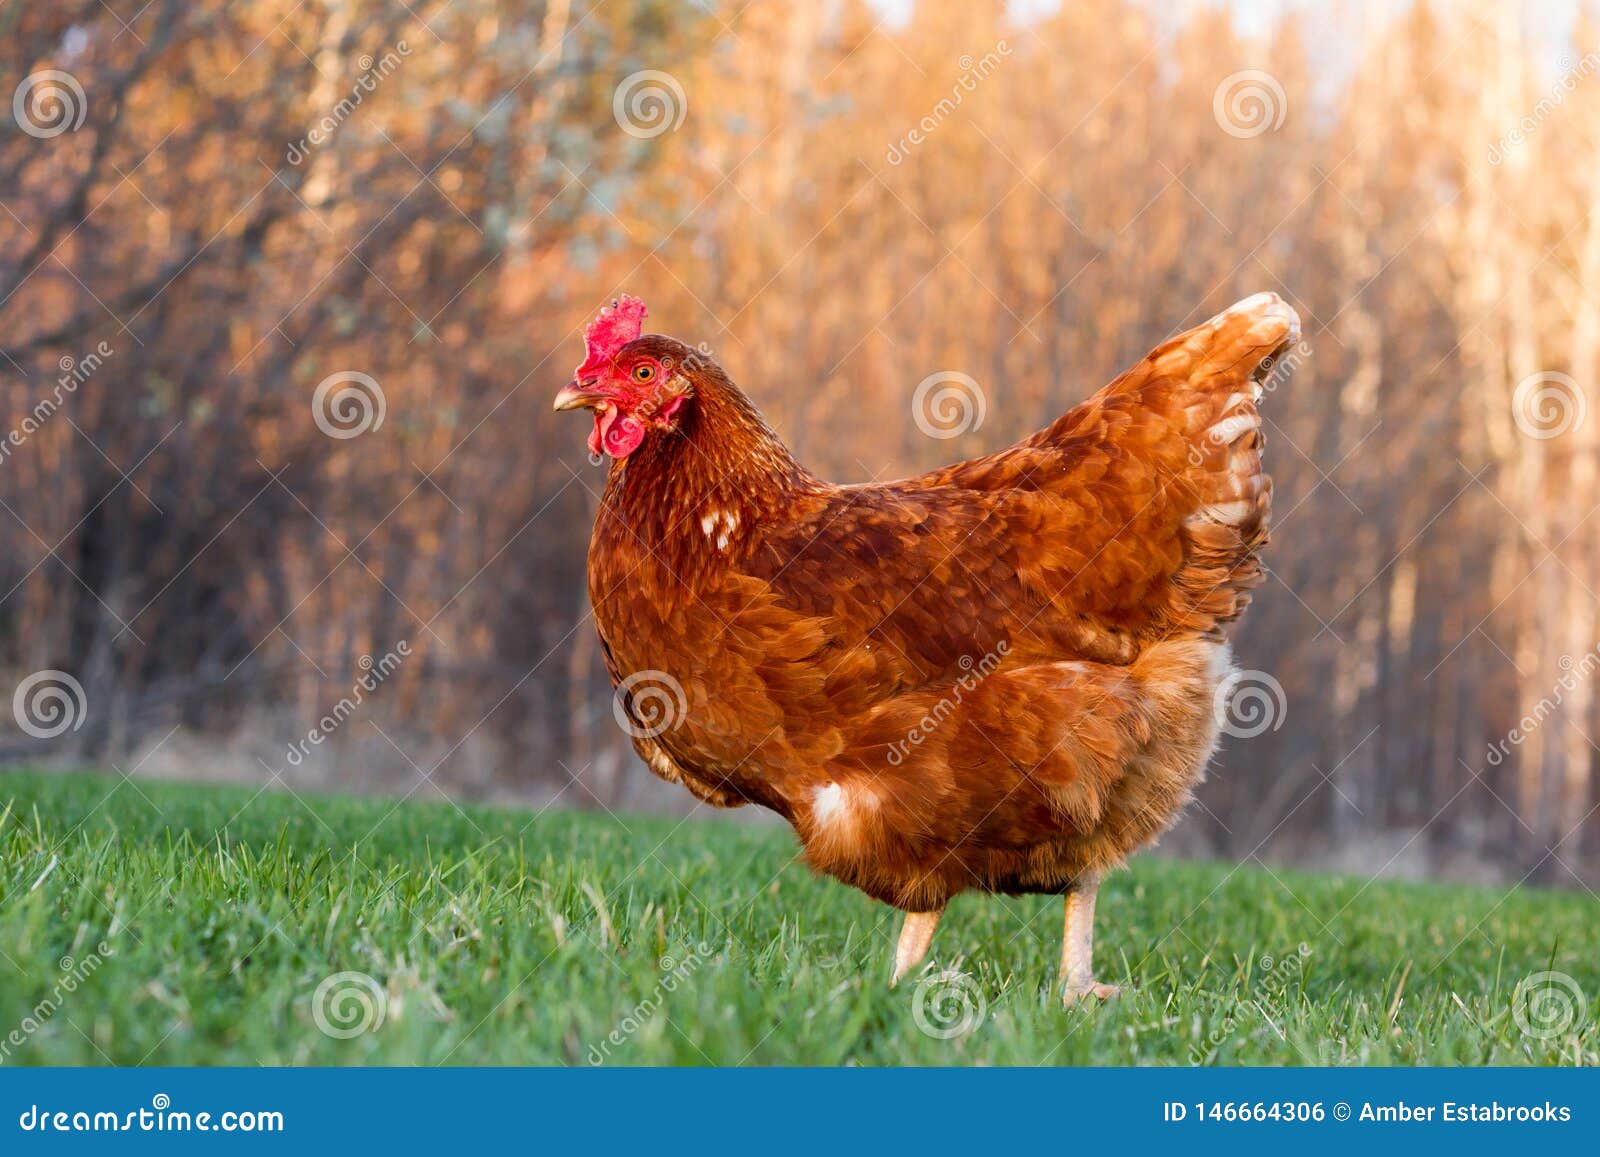 rhode island red hen